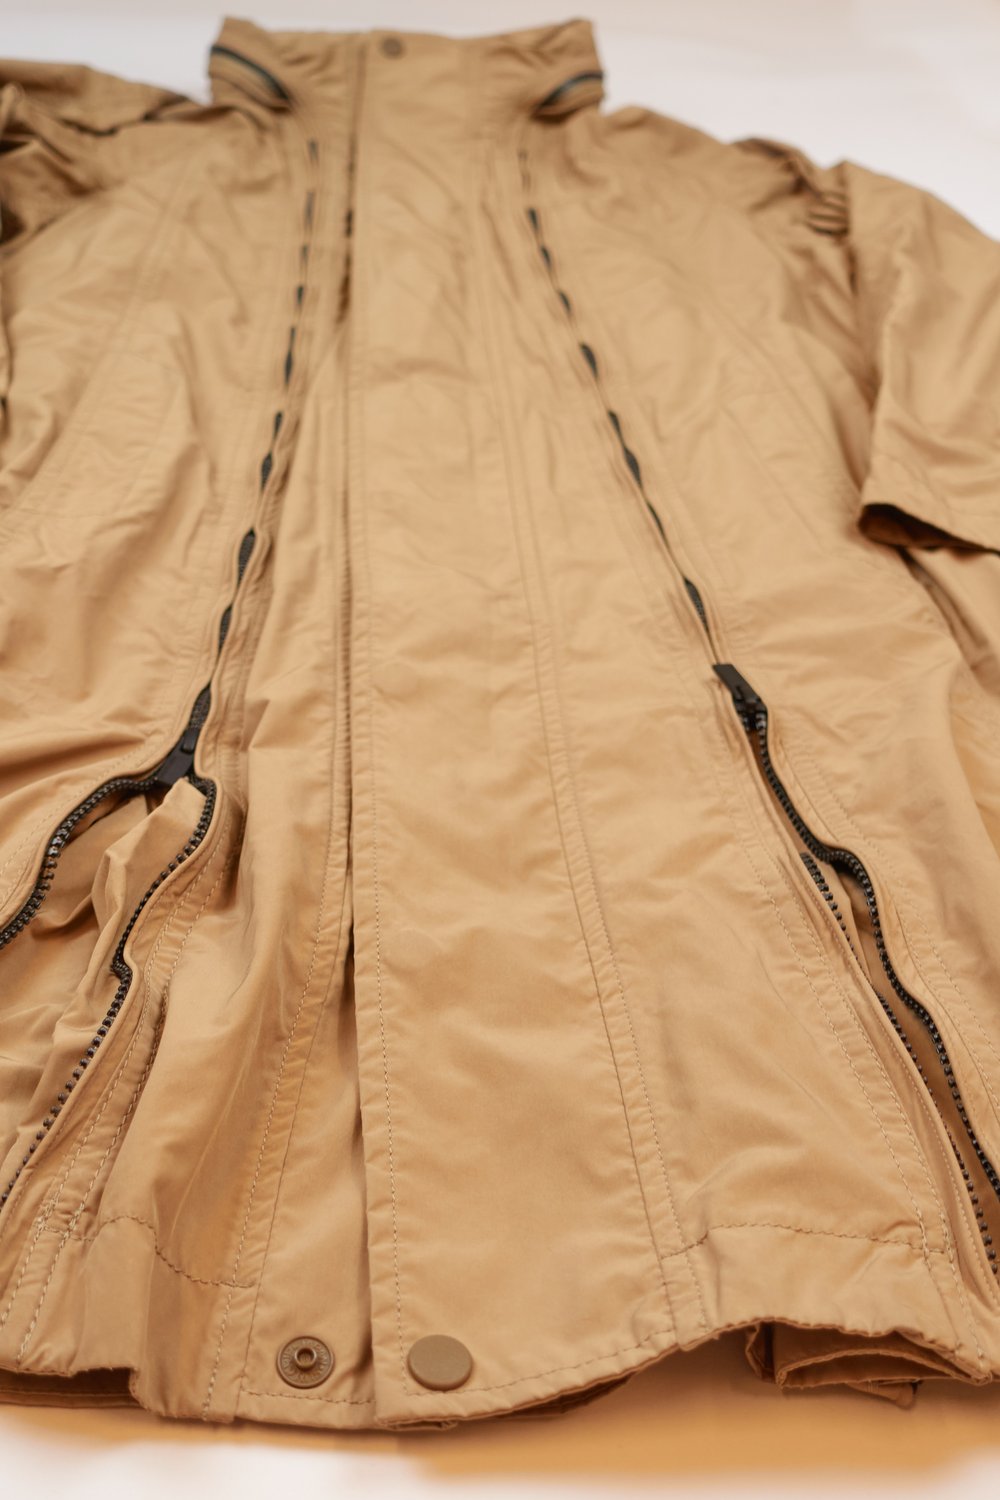 Issey Miyake hooded raincoat with full length zips